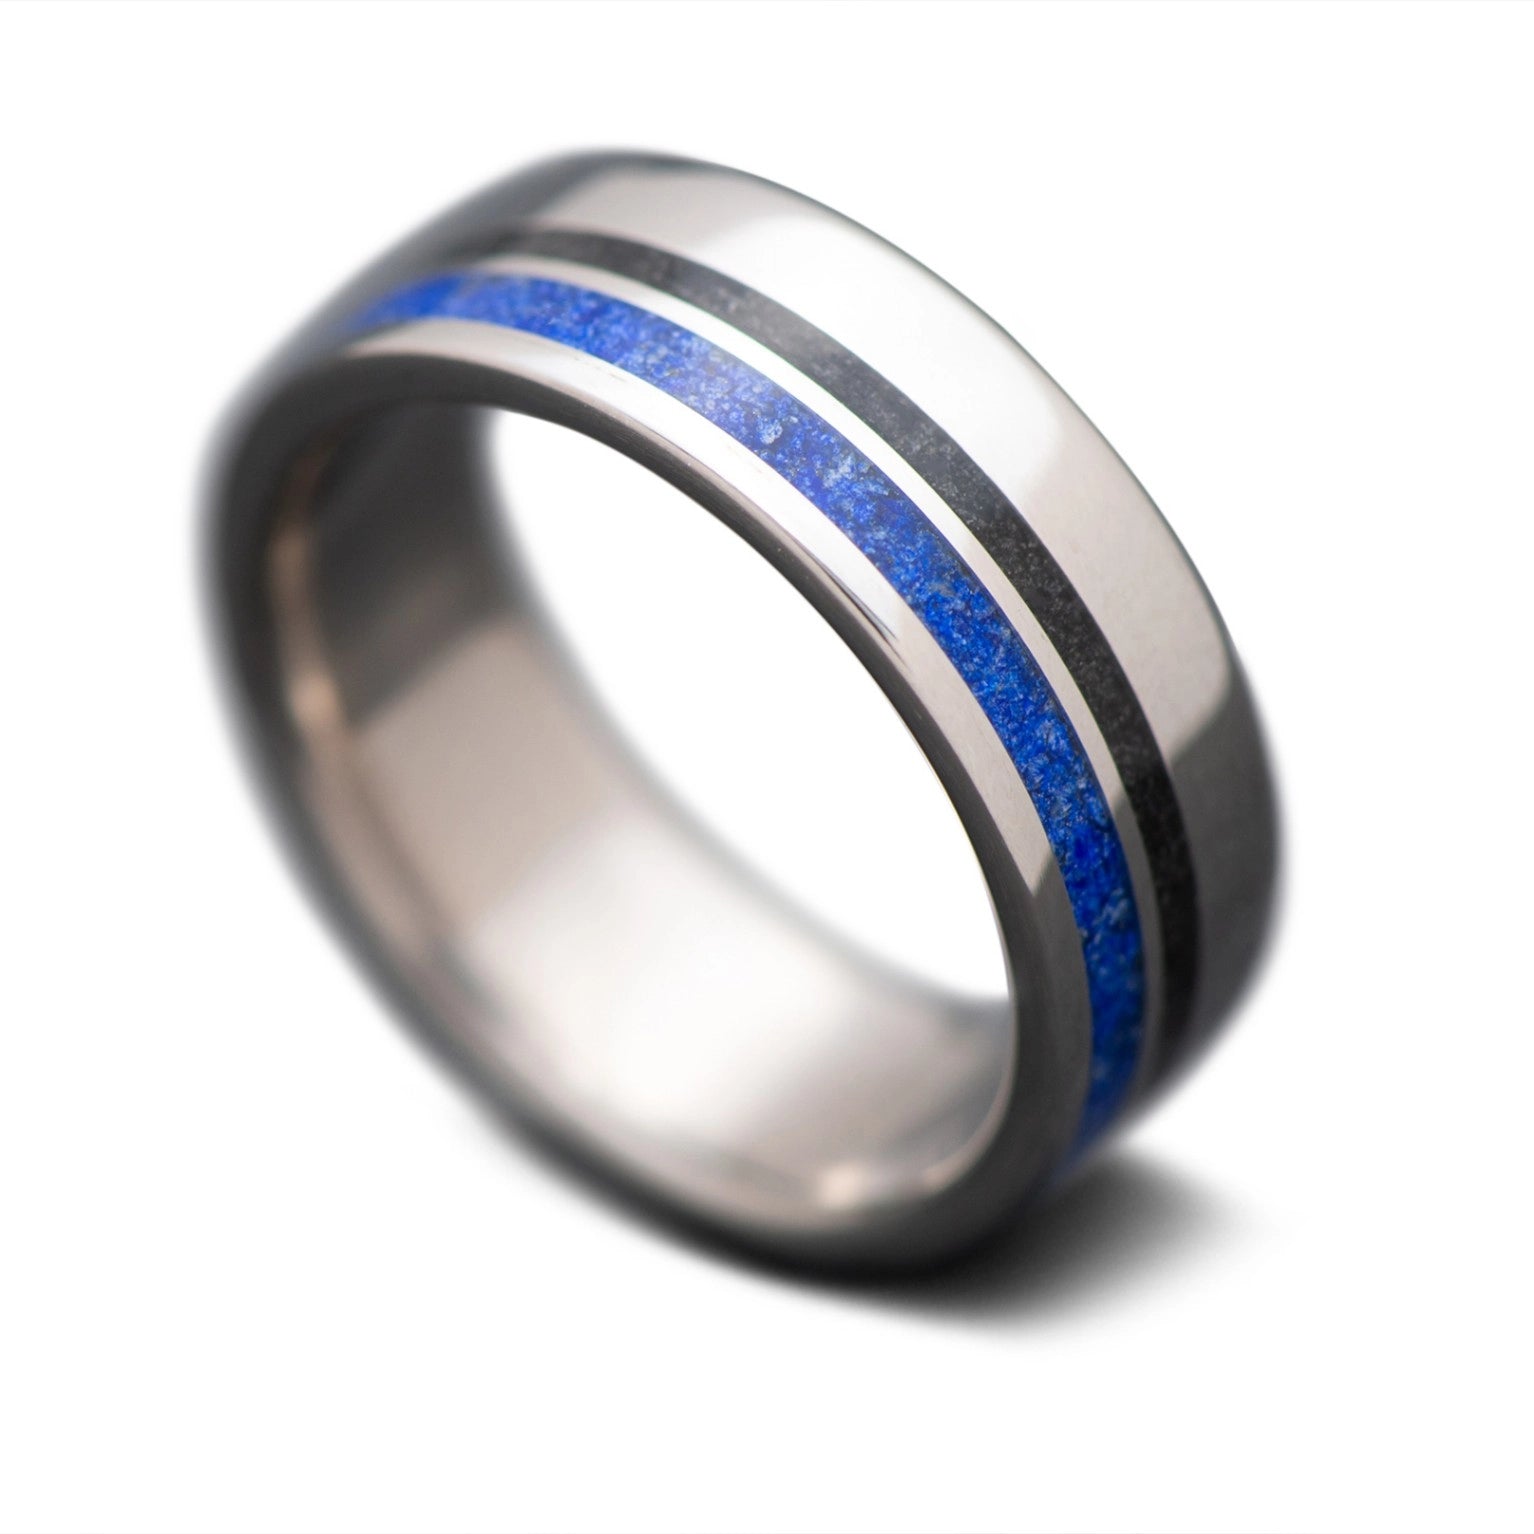 Titanium Core Ring with Black Onyx, Lapis Lazuli inlay, flat, polished, 7mm -THE GUARDIAN